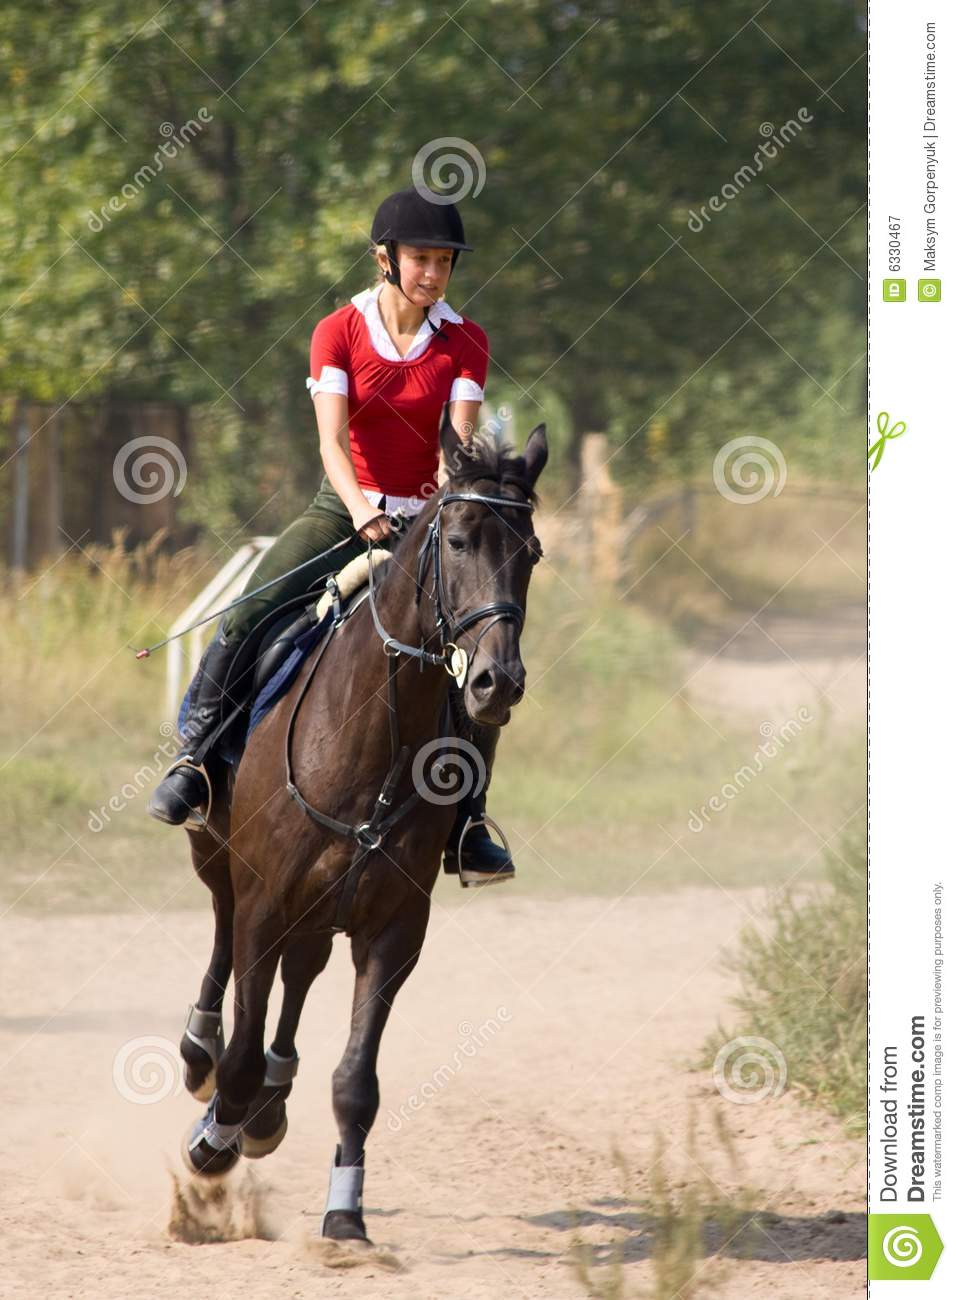 Woman Riding Horseback Royalty Free Stock Photography   Image  6330467